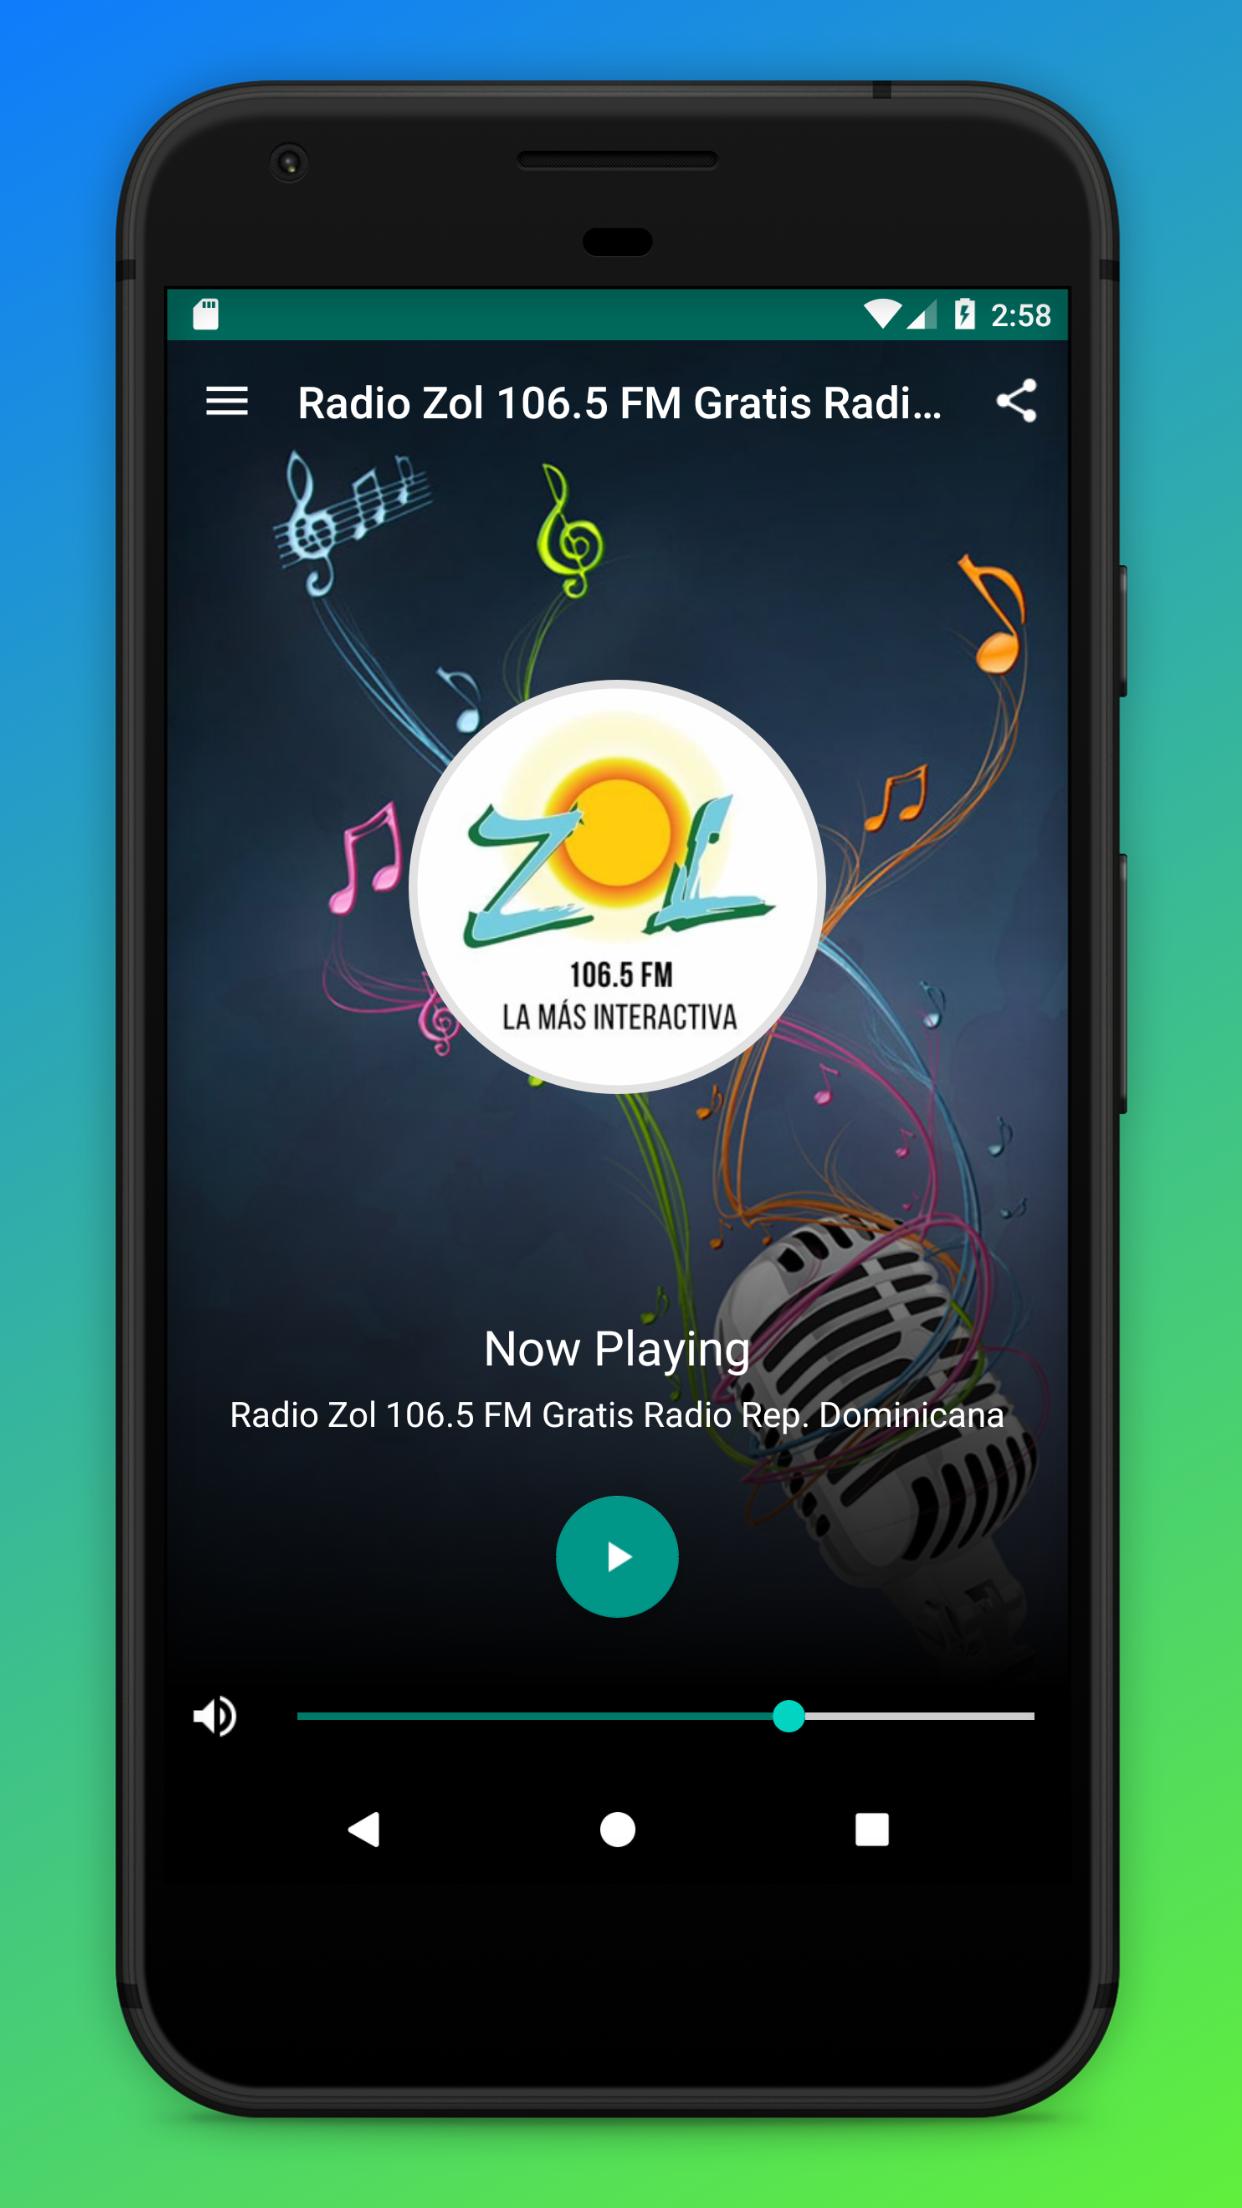 Radio Zol 106.5 FM Radio Rep. Dominicana for Android - APK Download